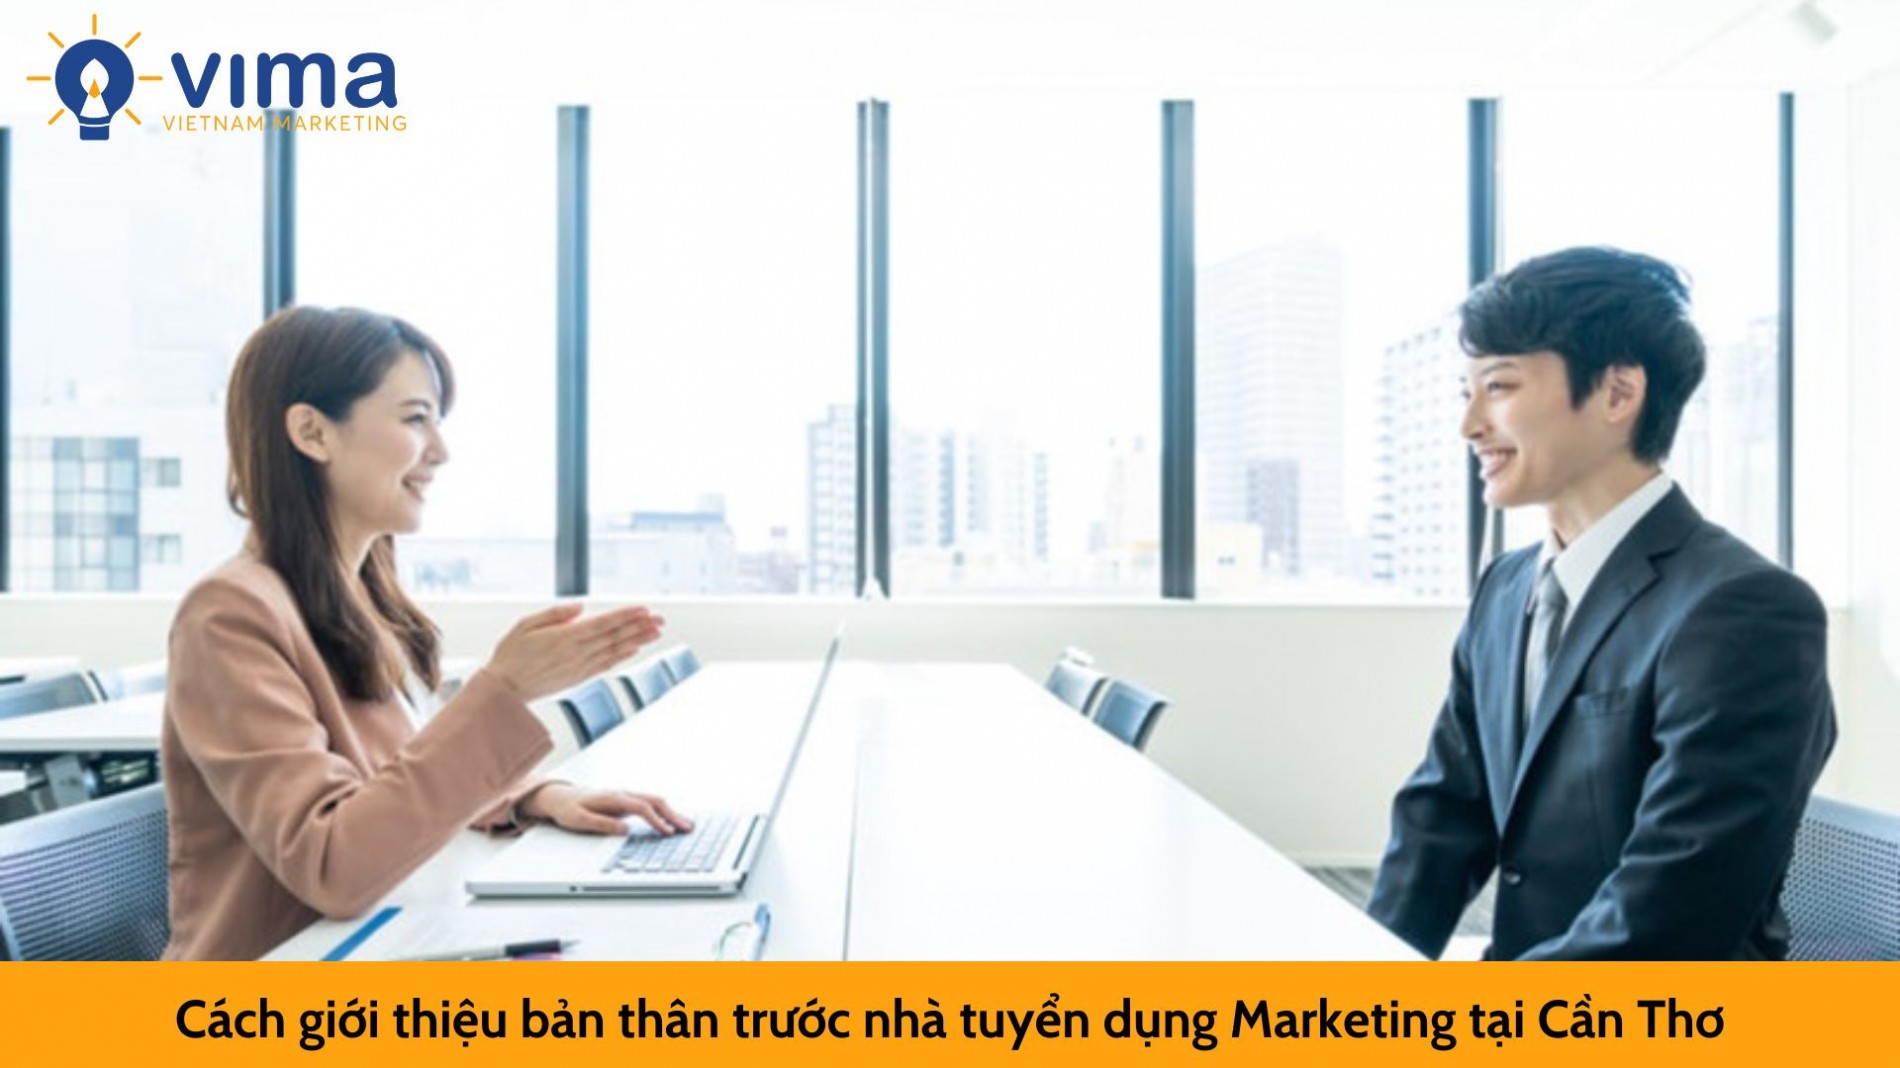 cach_gioi_thieu_ban_than_truoc_nha_tuyen_dung_marketing_tai_can_tho